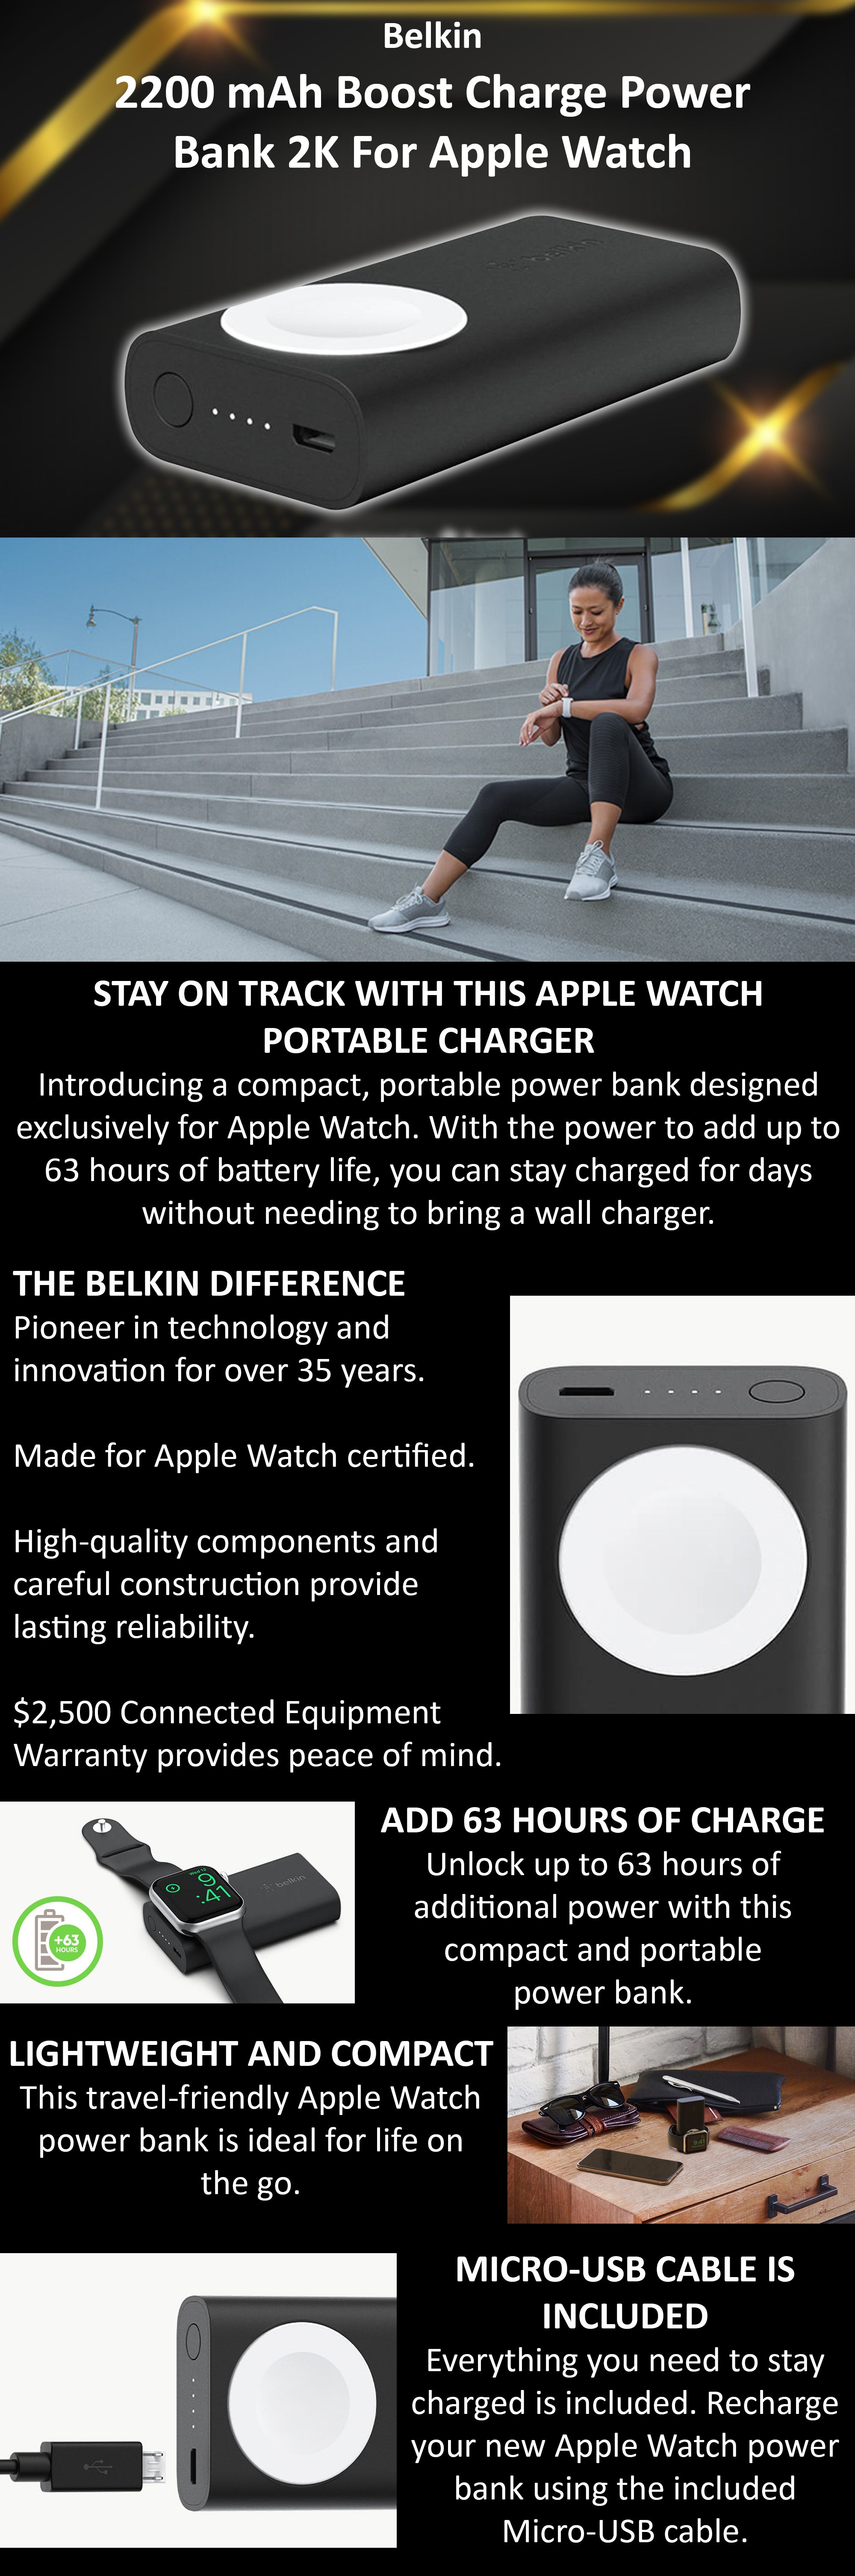 NEW Belkin Boost Charge Power Bank 2K for Apple Watch F8J233BTBLK